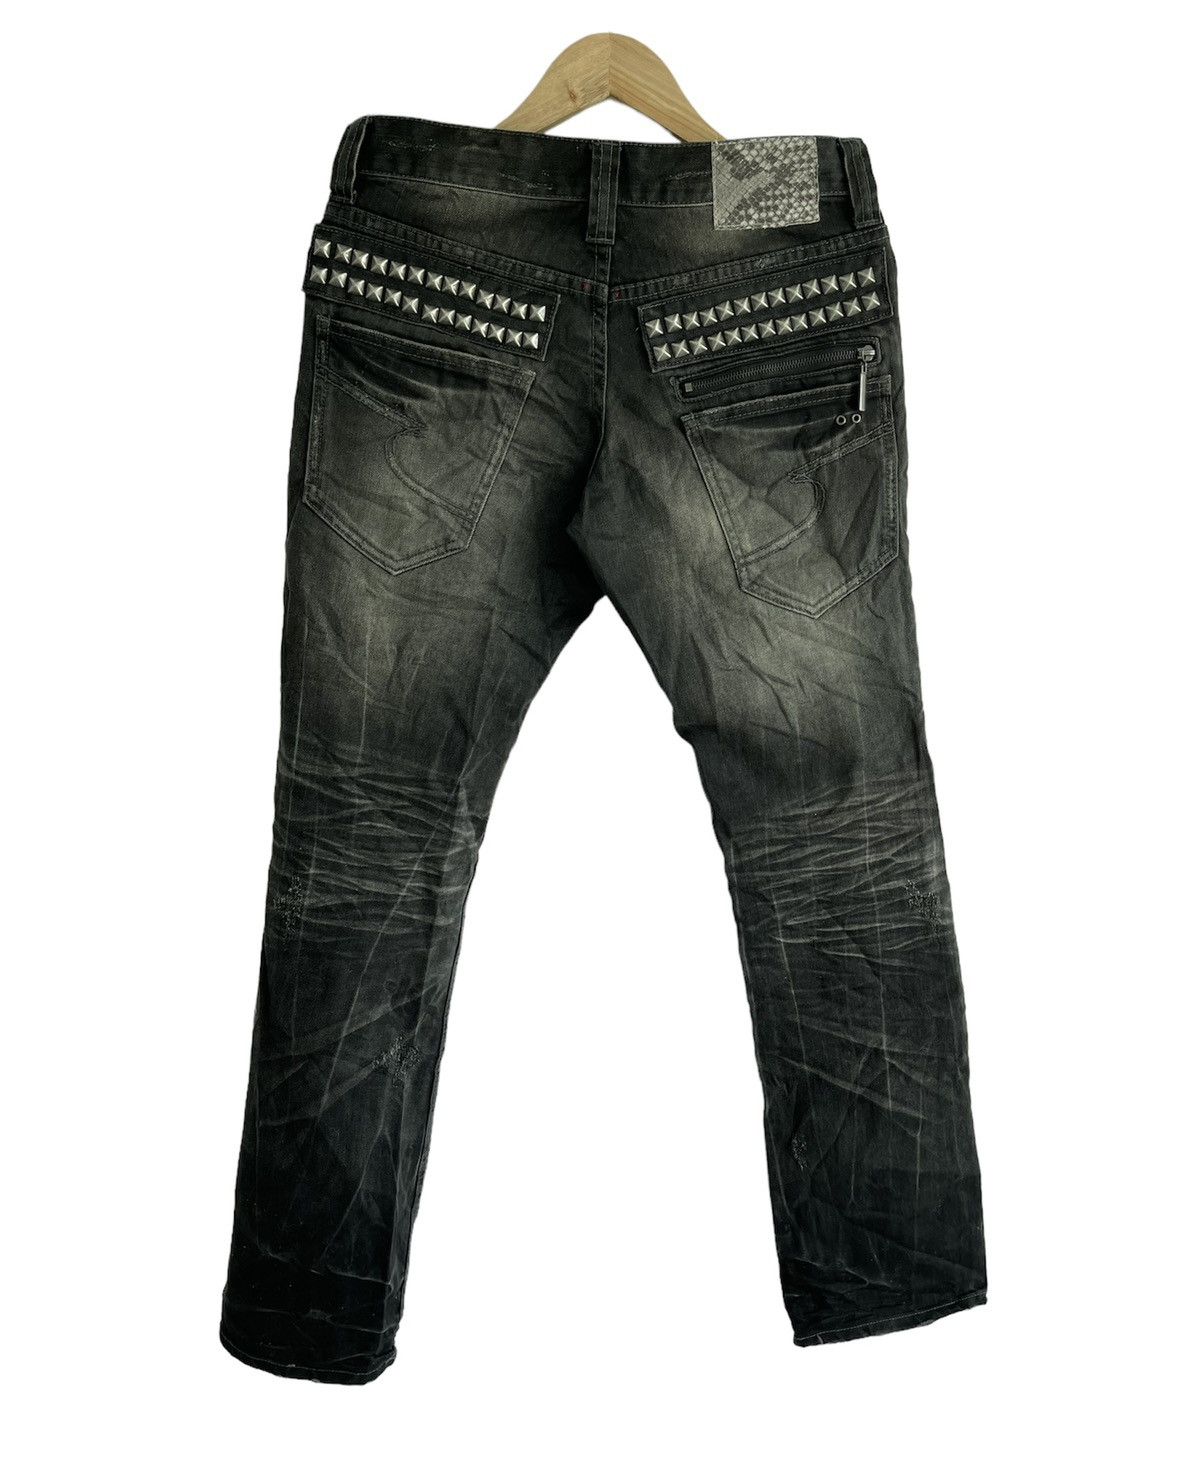 Japanese Brand - SEMANTIC DESIGN Punk Style Zipper Bootcut Flared Jeans - 2